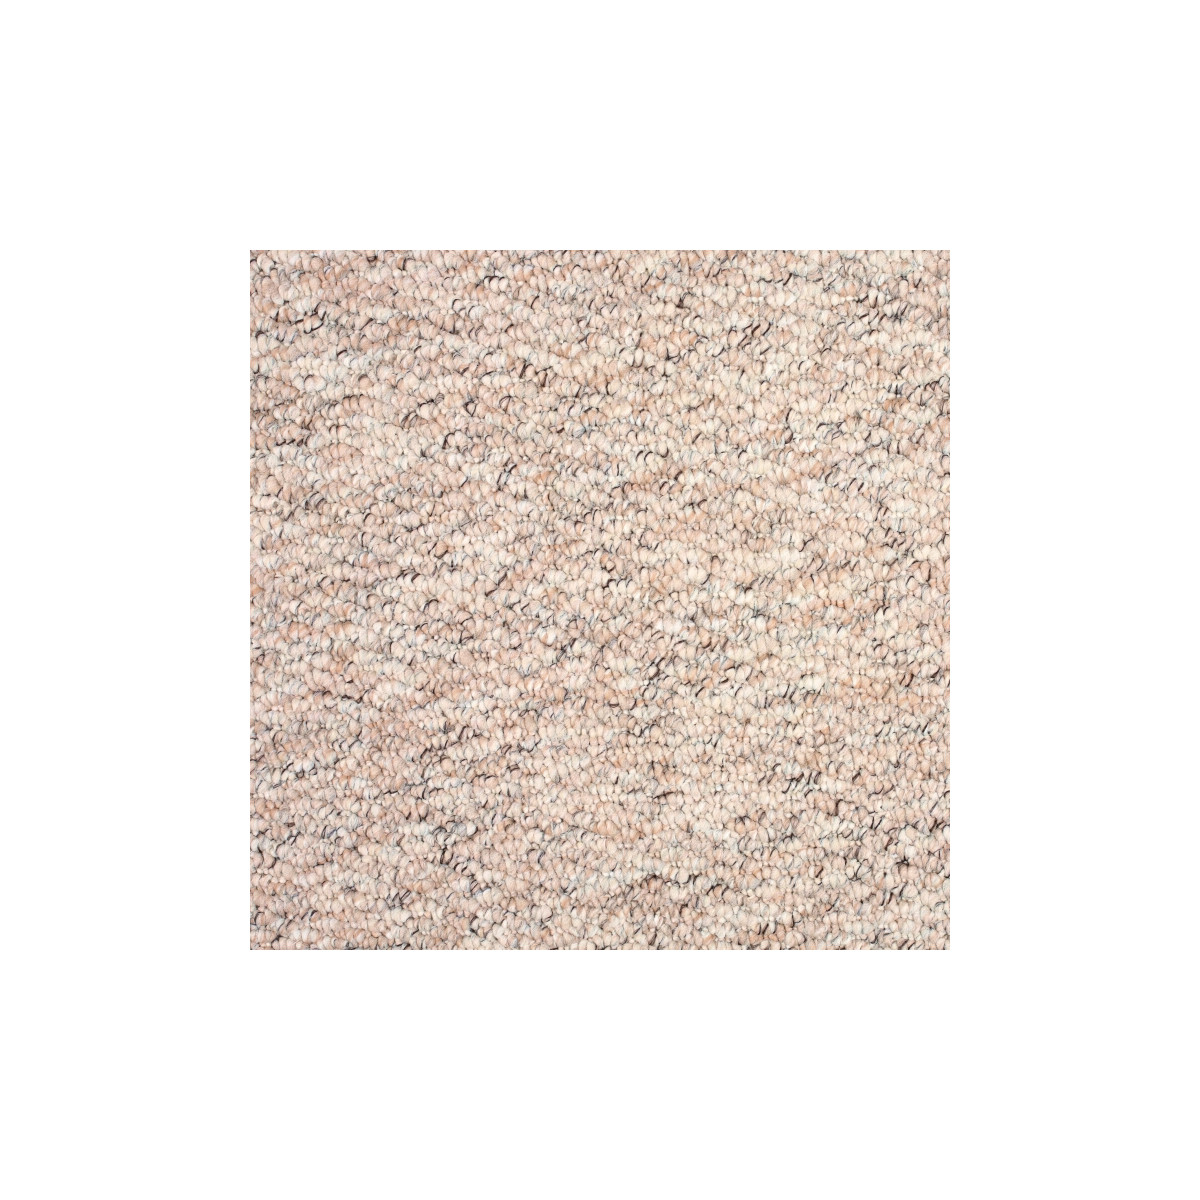 Metrážový koberec Evita 6414